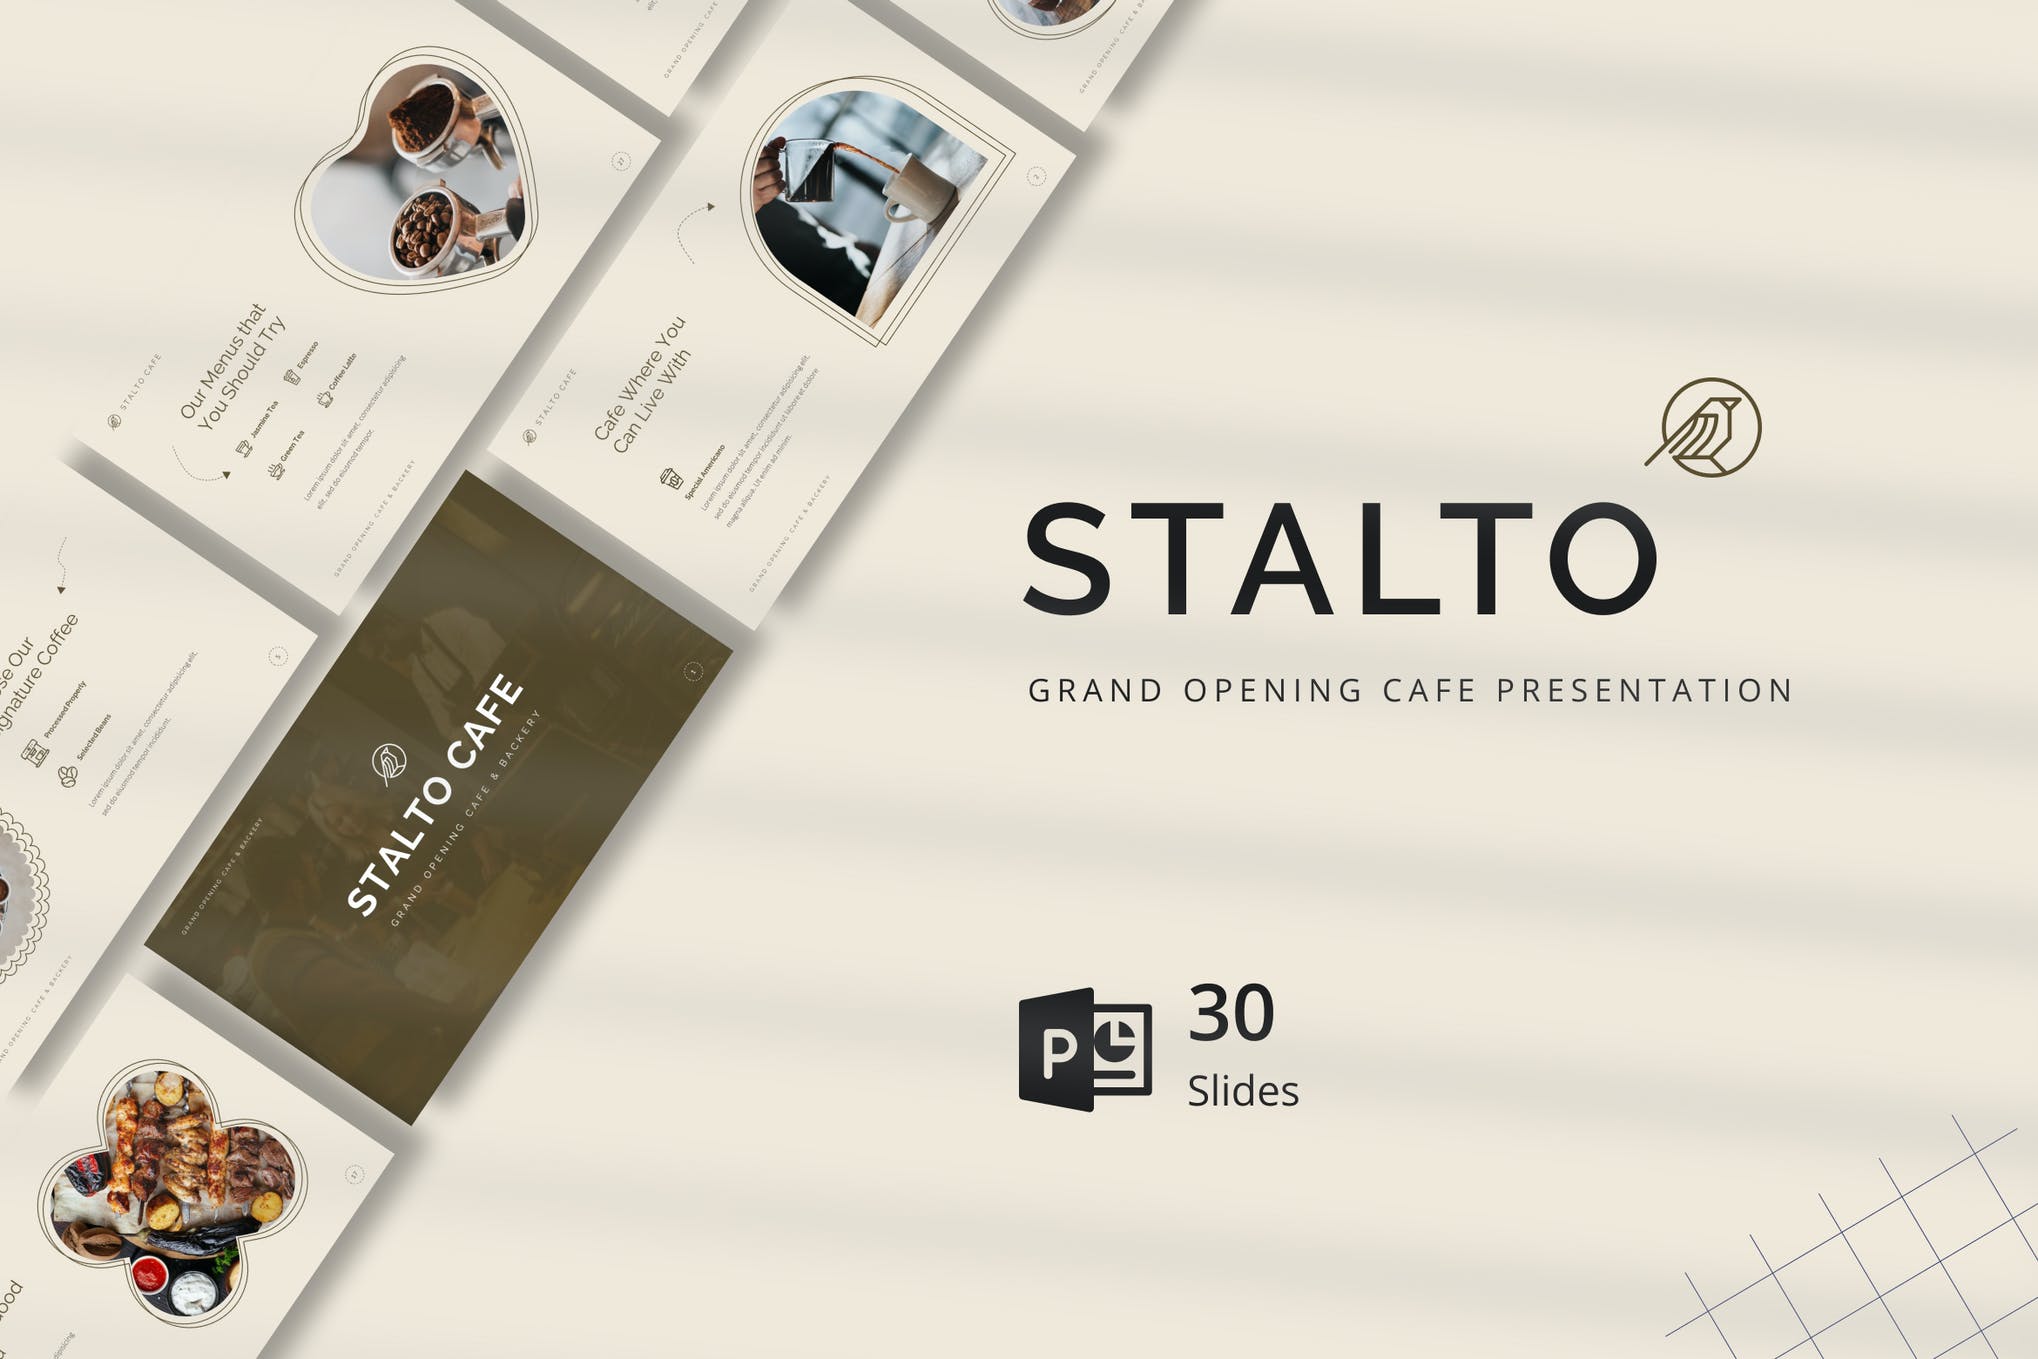 Stalto - Grand Opening Cafe Presentation